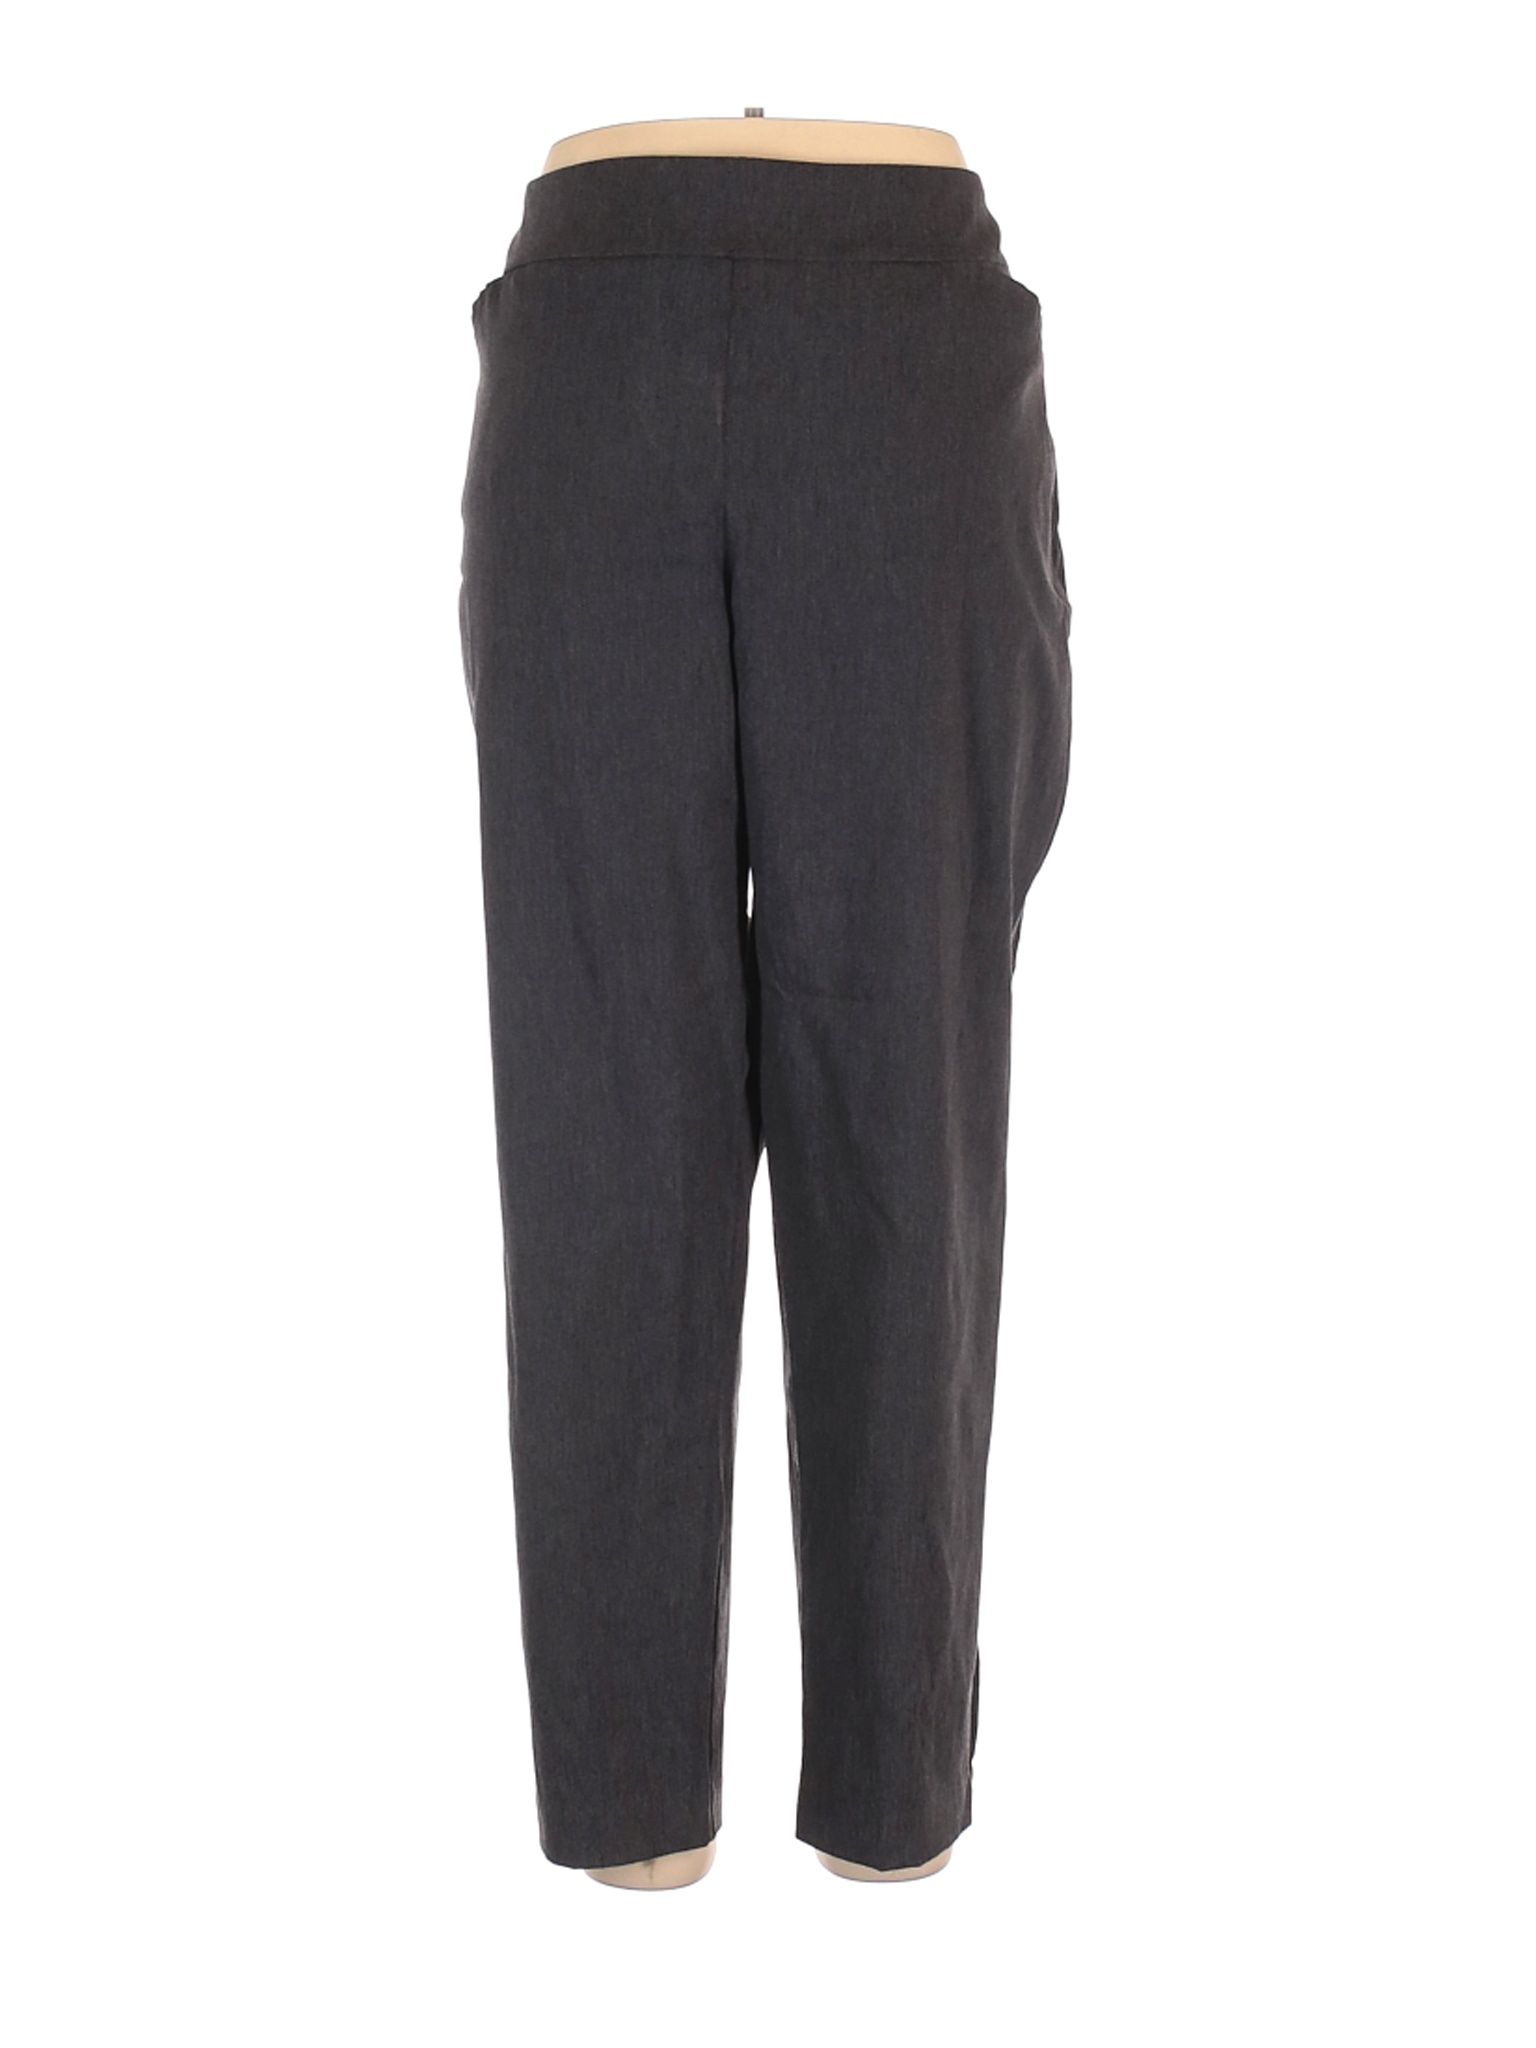 Terra & Sky Women Black Dress Pants 1X Plus | eBay